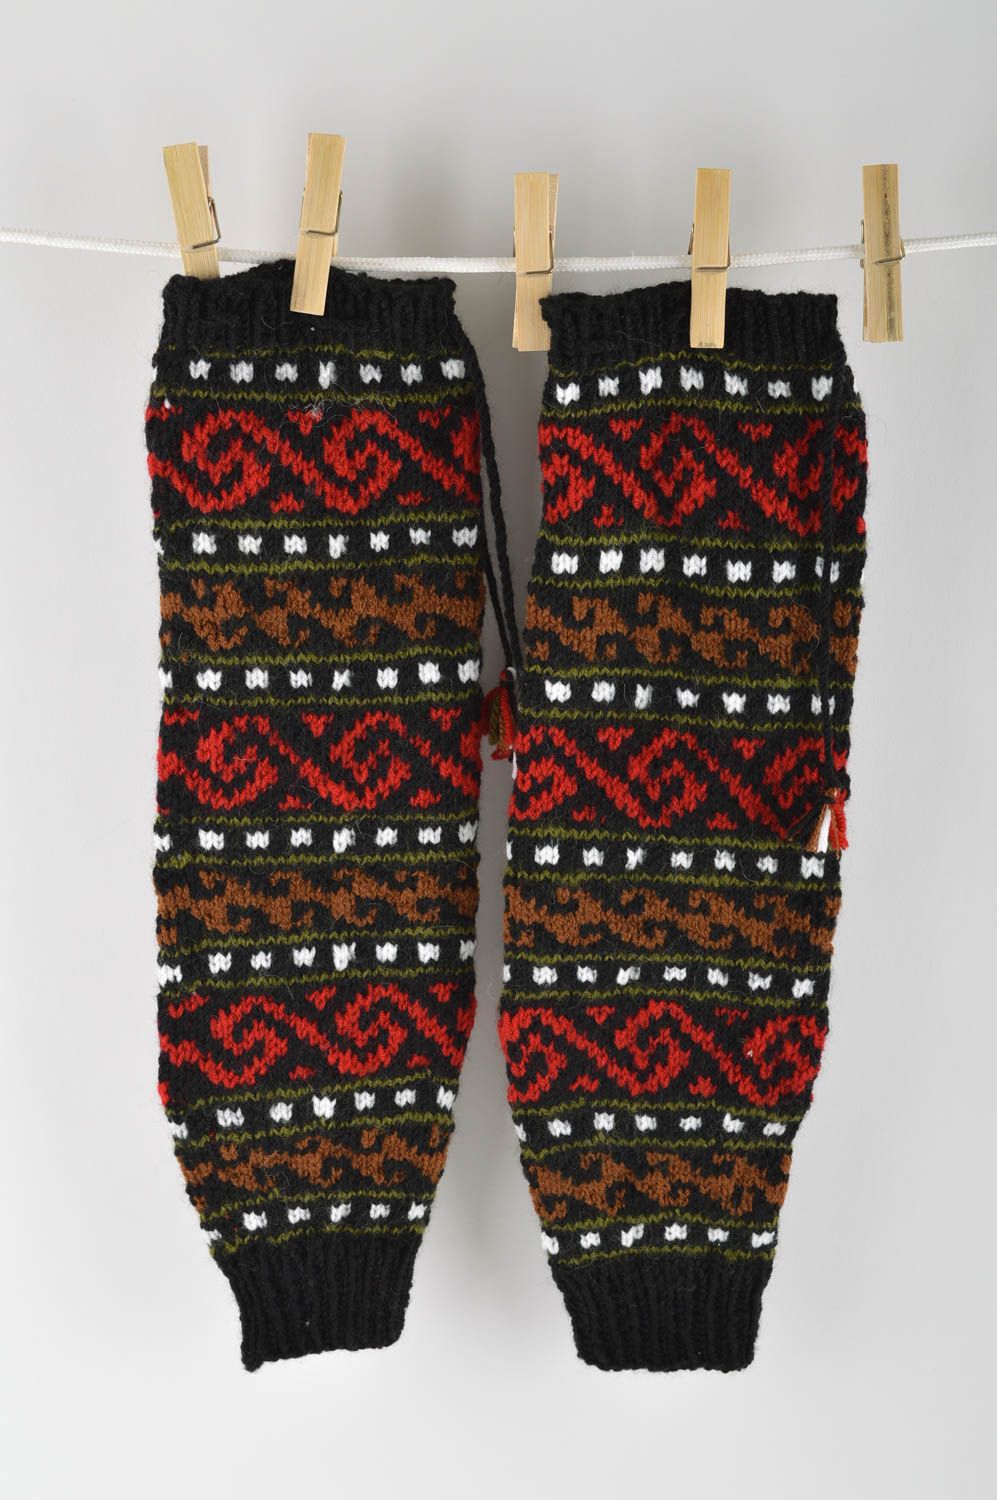 Handmade designer leg warmers knitted winter socks woolen leg warmers for women photo 1